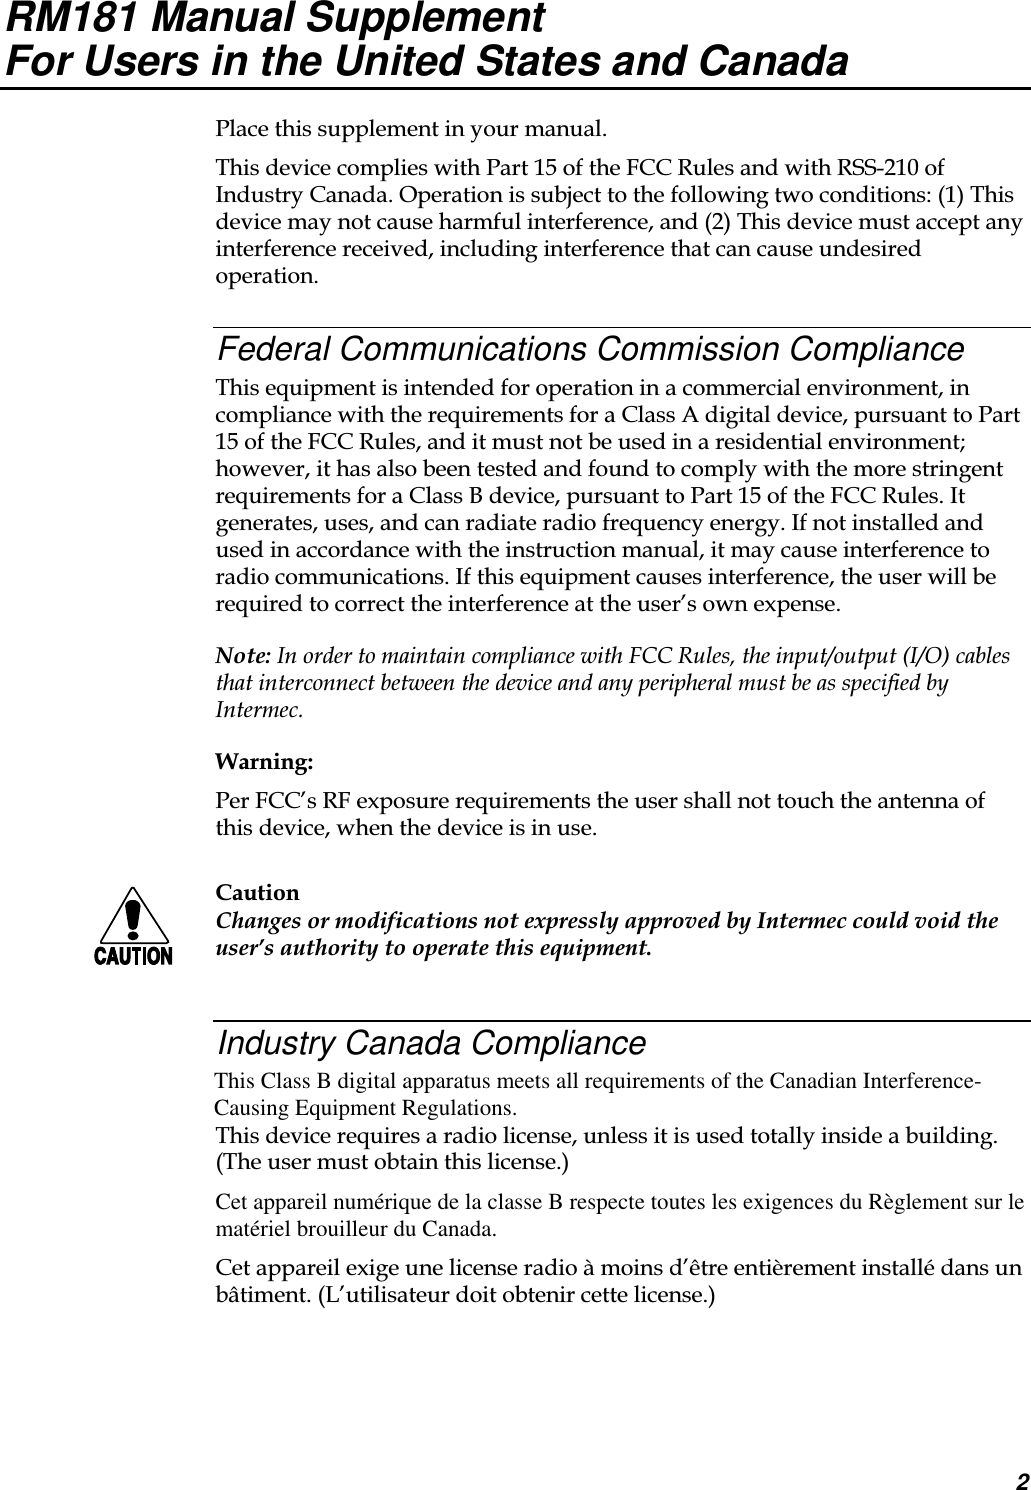 2RM181 Manual SupplementFor Users in the United States and Canada !&quot;#$%&amp;&apos;()&apos;()%Federal Communications Commission Compliance*)*+%))#,)#%*-)!%))*%!)!*)#*././*)Industry Canada ComplianceThis Class B digital apparatus meets all requirements of the Canadian Interference-Causing Equipment Regulations.*)#%&apos;#(Cet appareil numérique de la classe B respecte toutes les exigences du Règlement sur lematériel brouilleur du Canada./%0.123#4&apos;5.#(